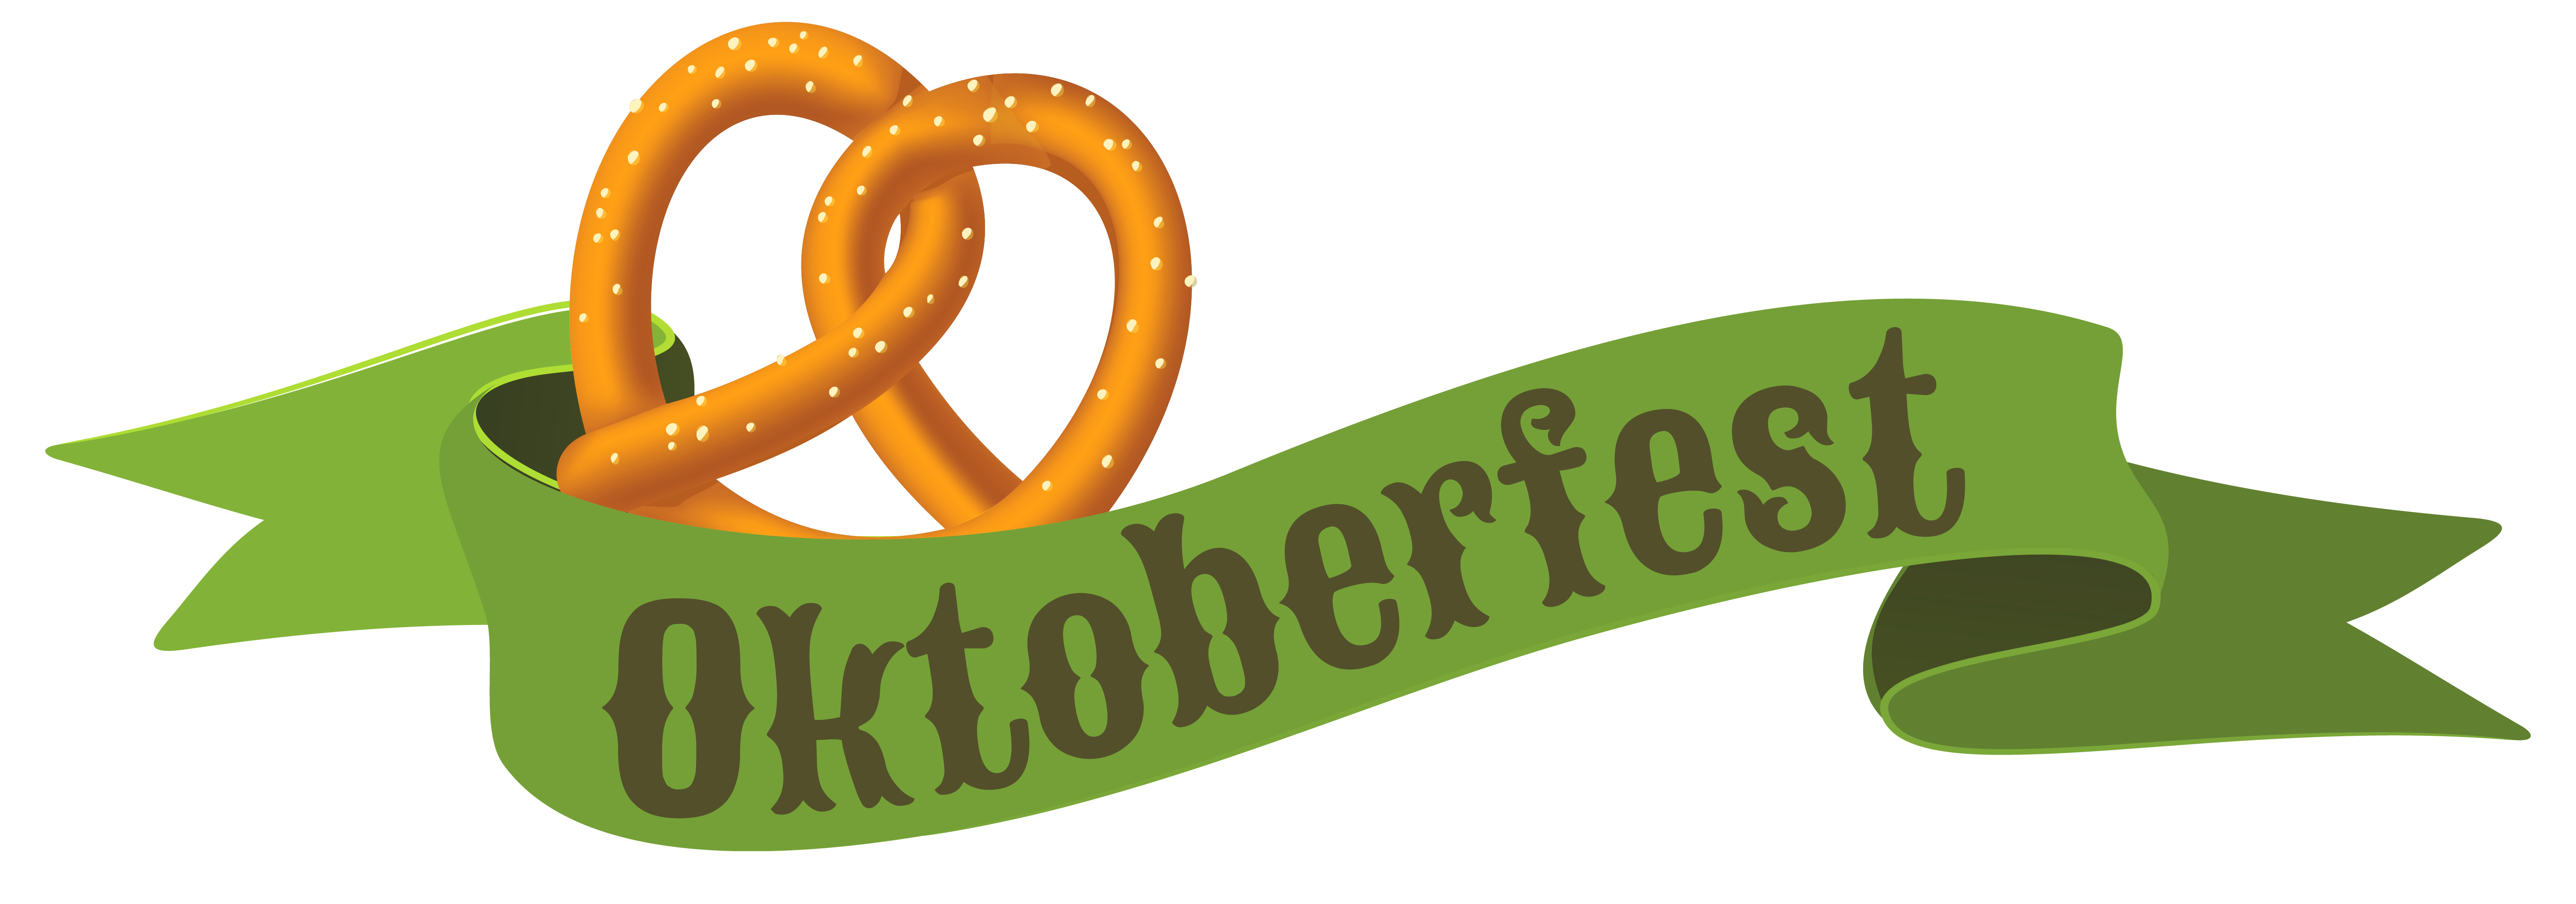 Oktoberfest green png image. Clipart food banner